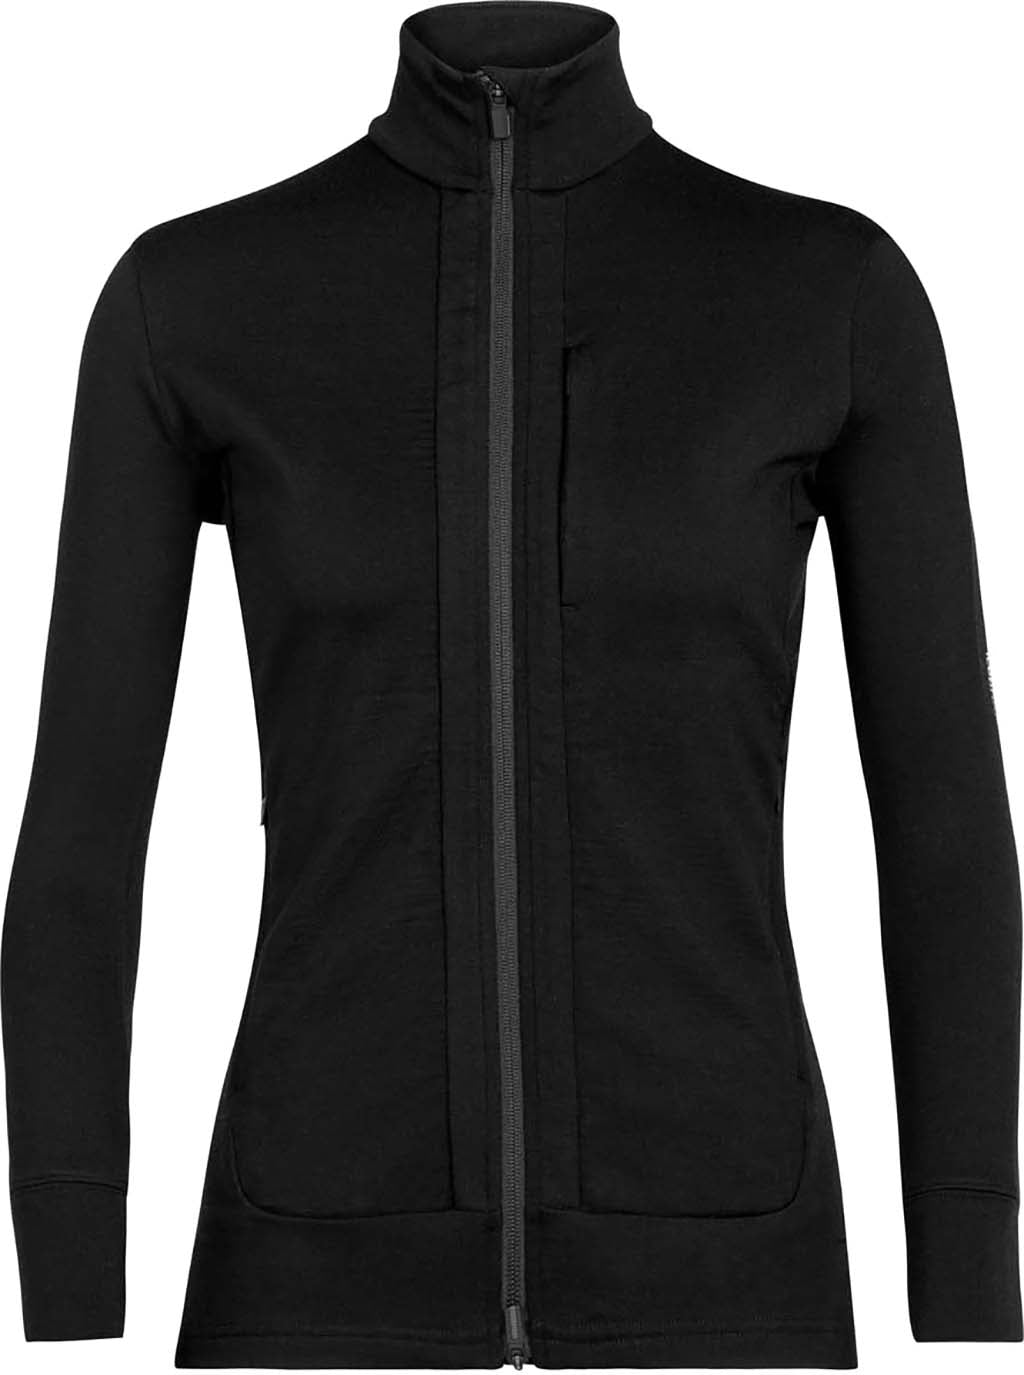  Icebreaker Merino Quantum III Long Sleeve Full Zip Jacket for  Women, 100% Merino Wool, Soft Sweatshirt Jacket for Women with Thumb Holes,  Zippered Pockets- Winter Clothes for Women, Go Berry, Medium 